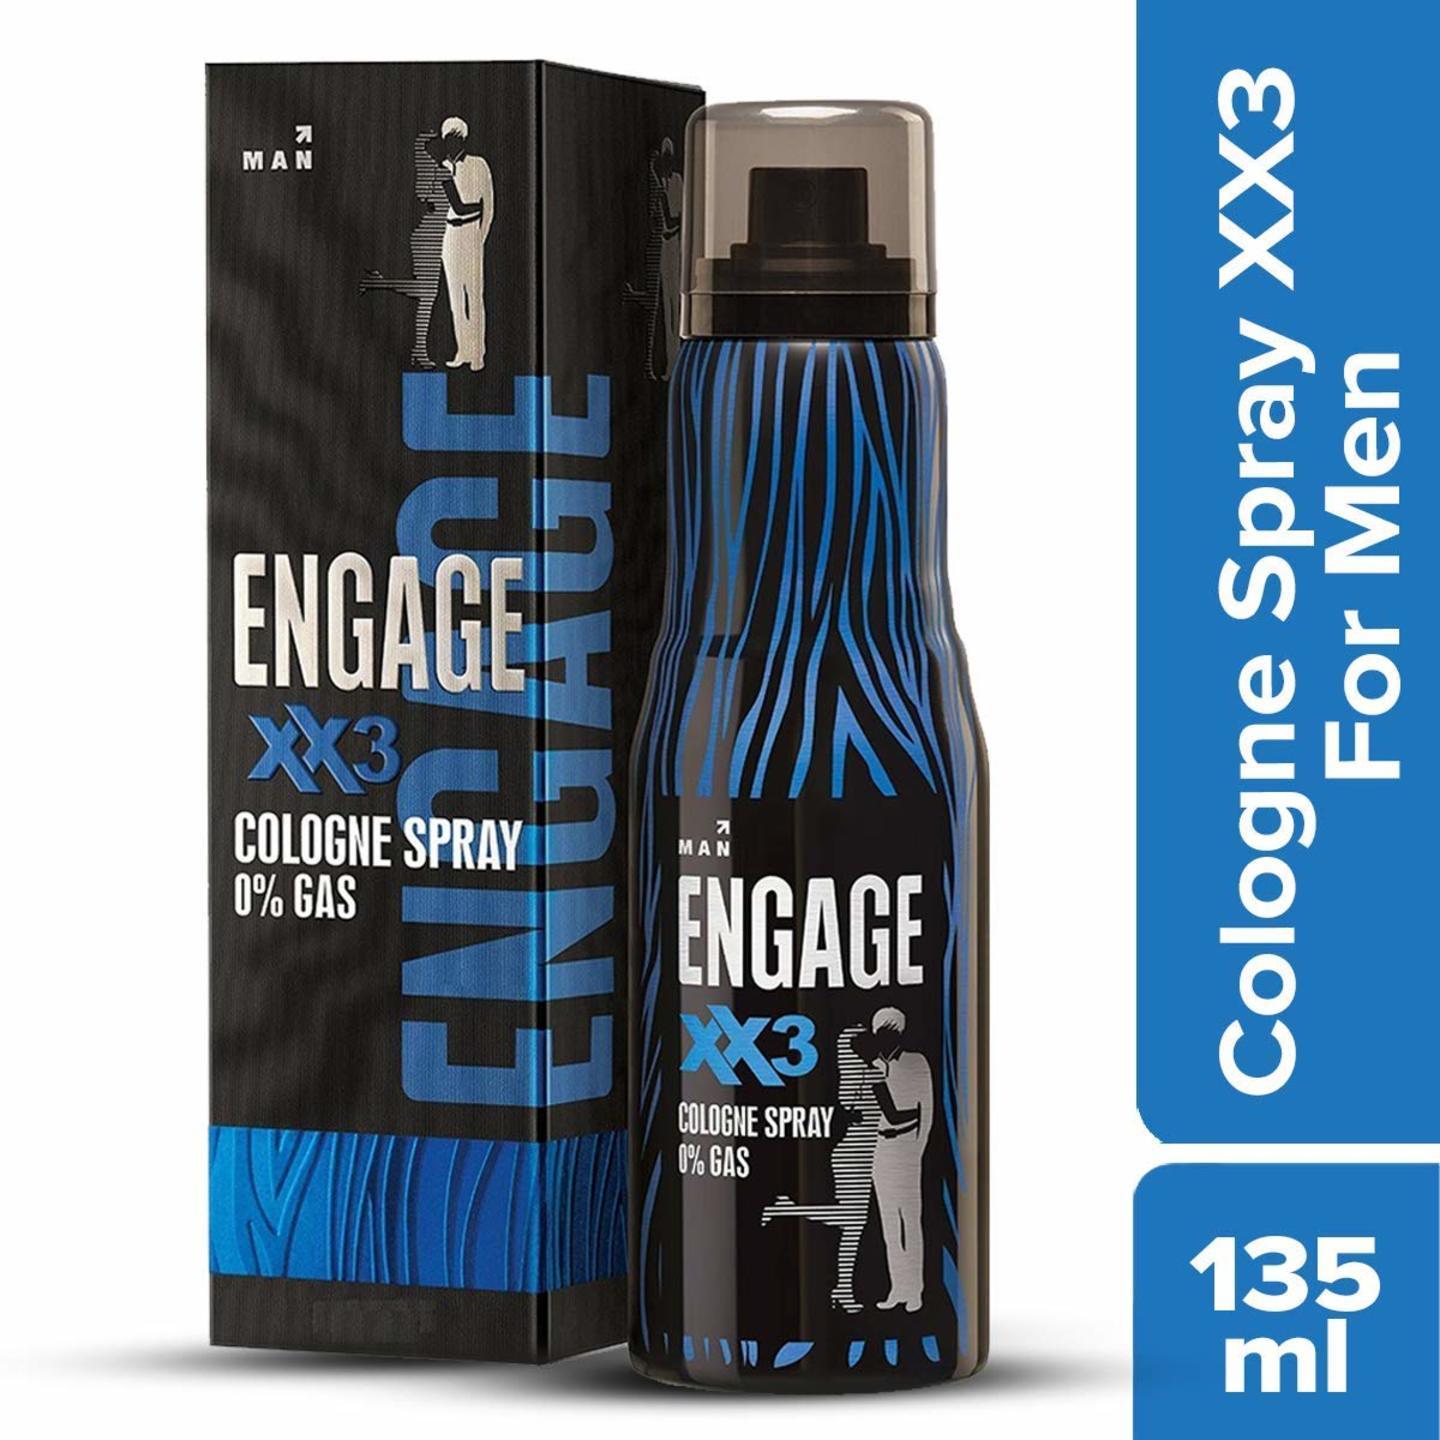 Engage XX3 Cologne No Gas Perfume for Men 135ml  InnerMan